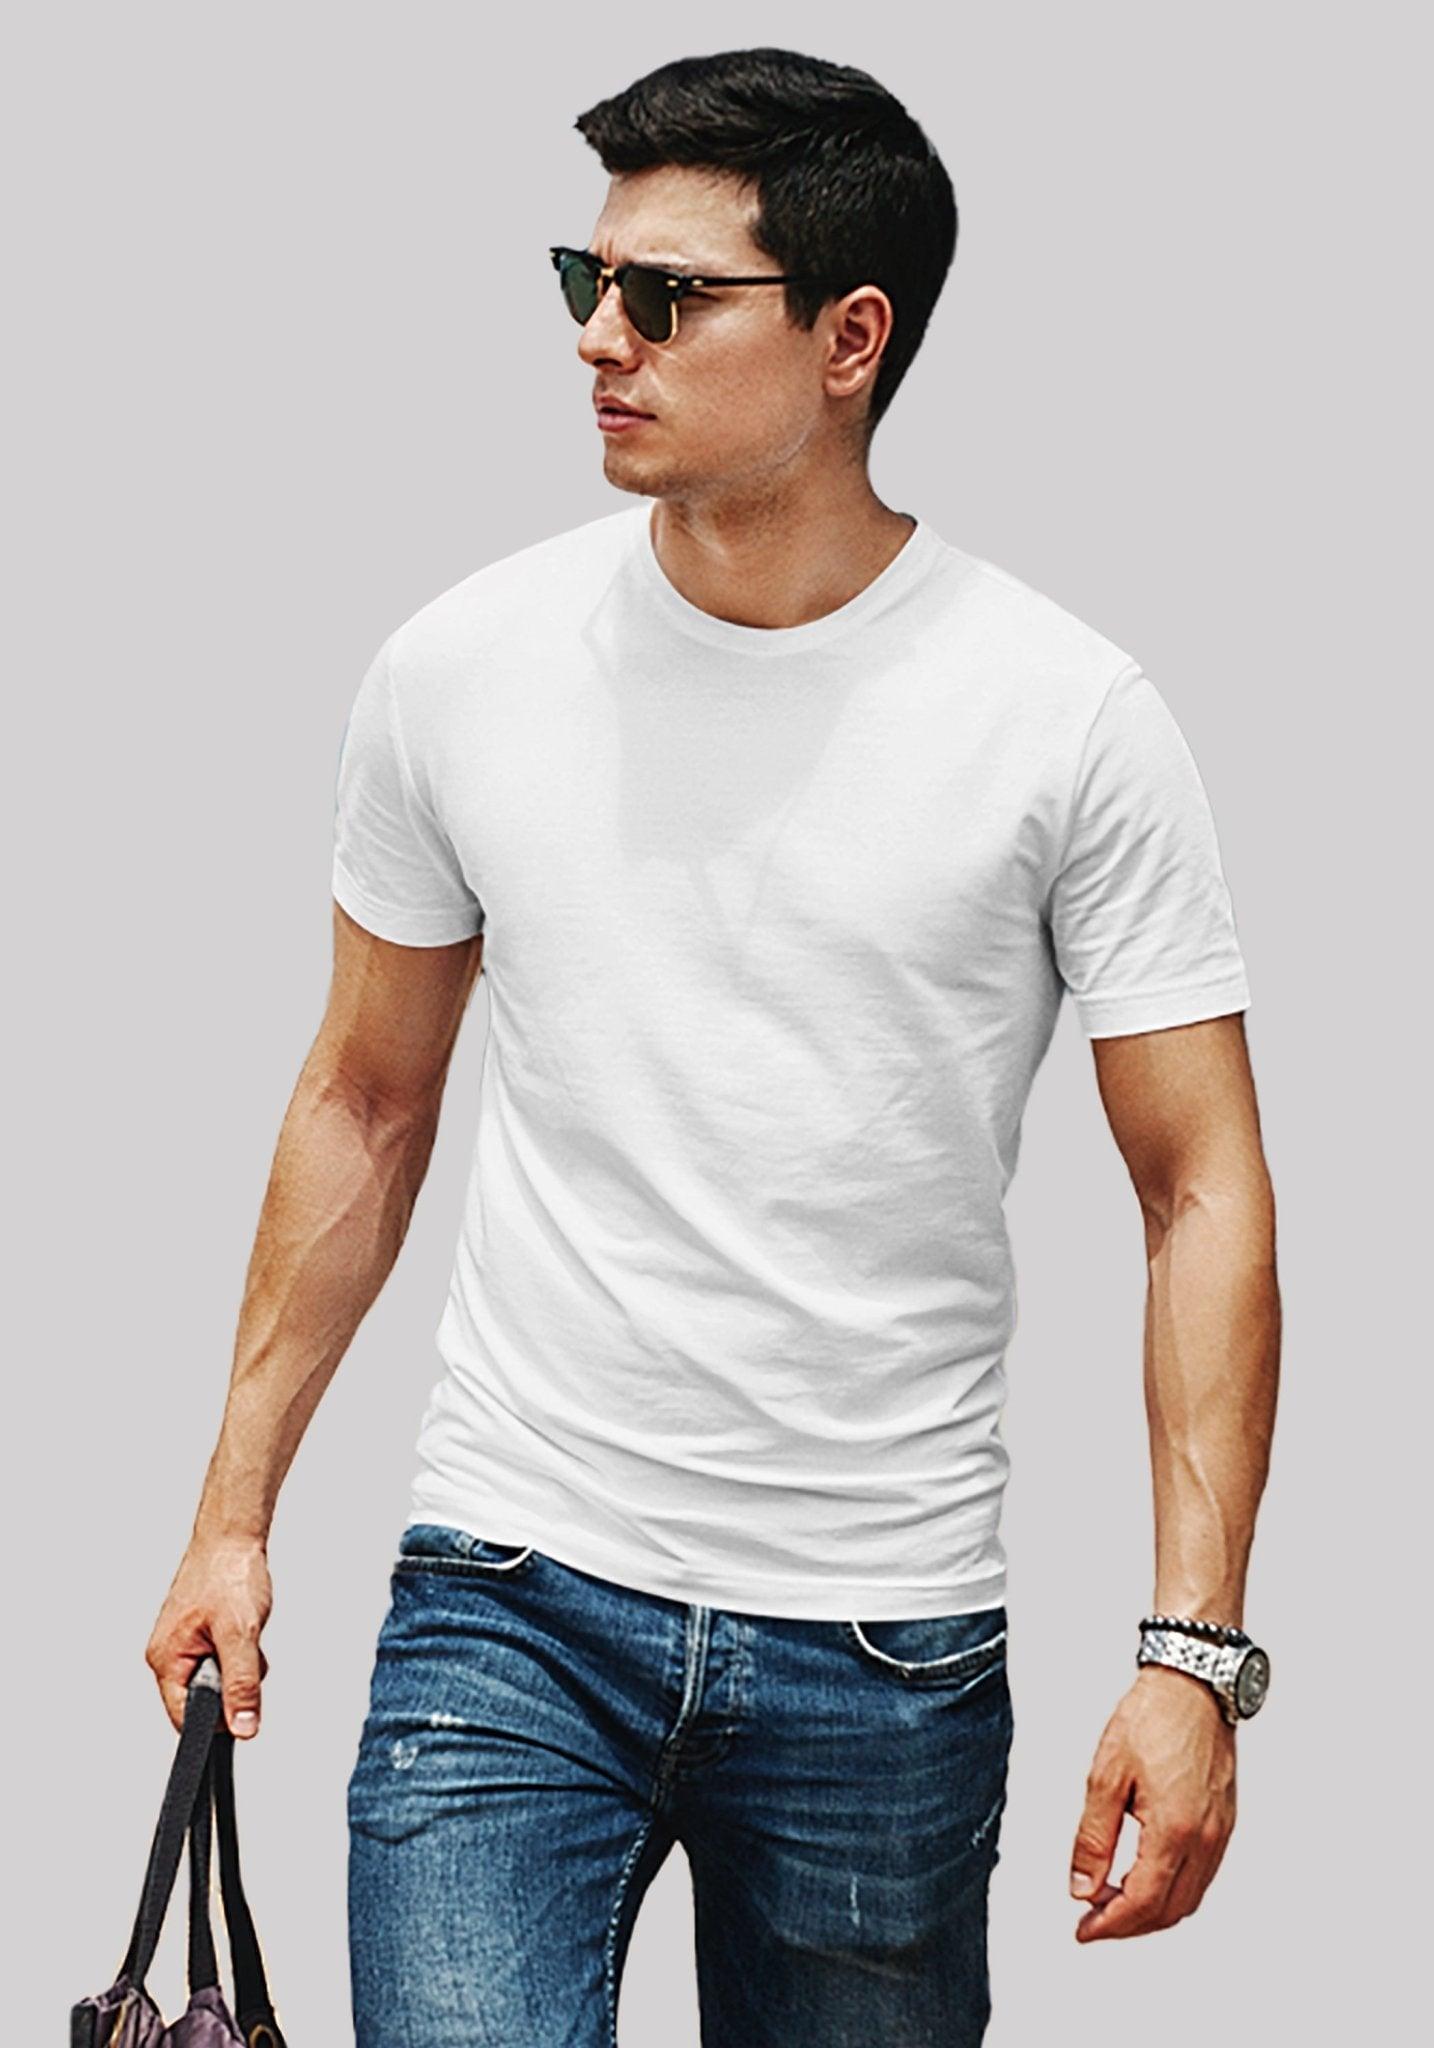 Solid Plain T Shirt For Men In bright White Colour Variant